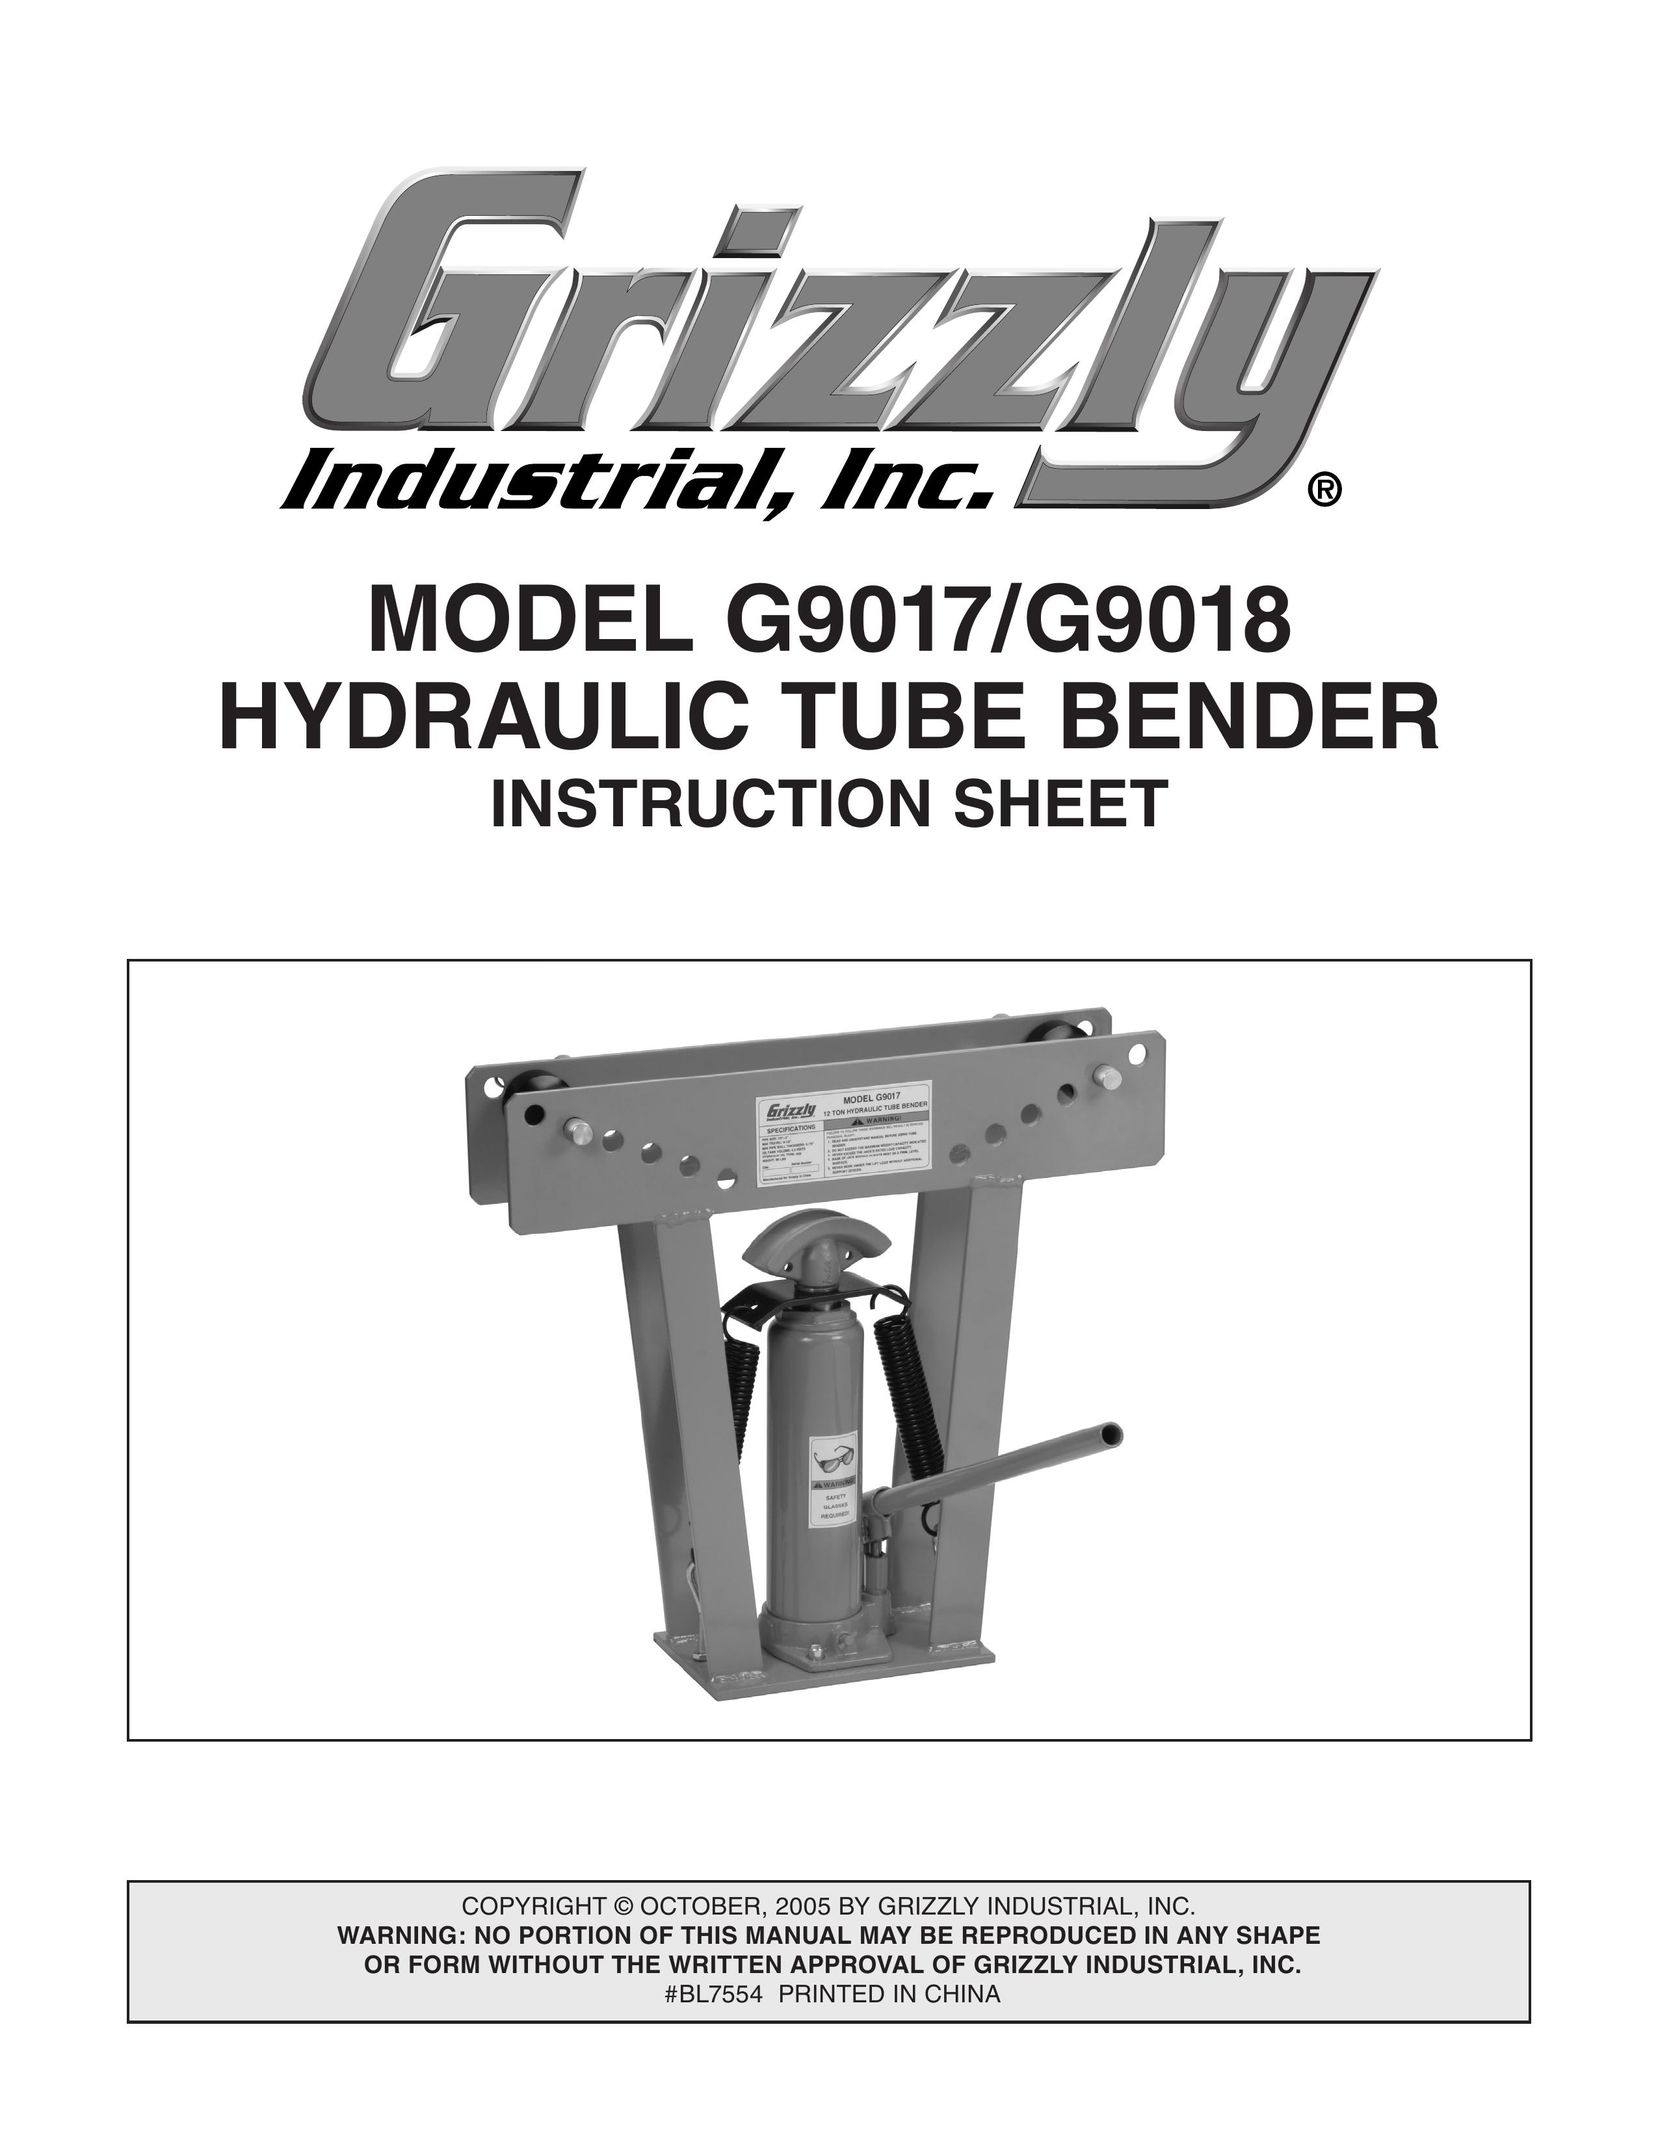 Grizzly G9017/G9018 Blender User Manual